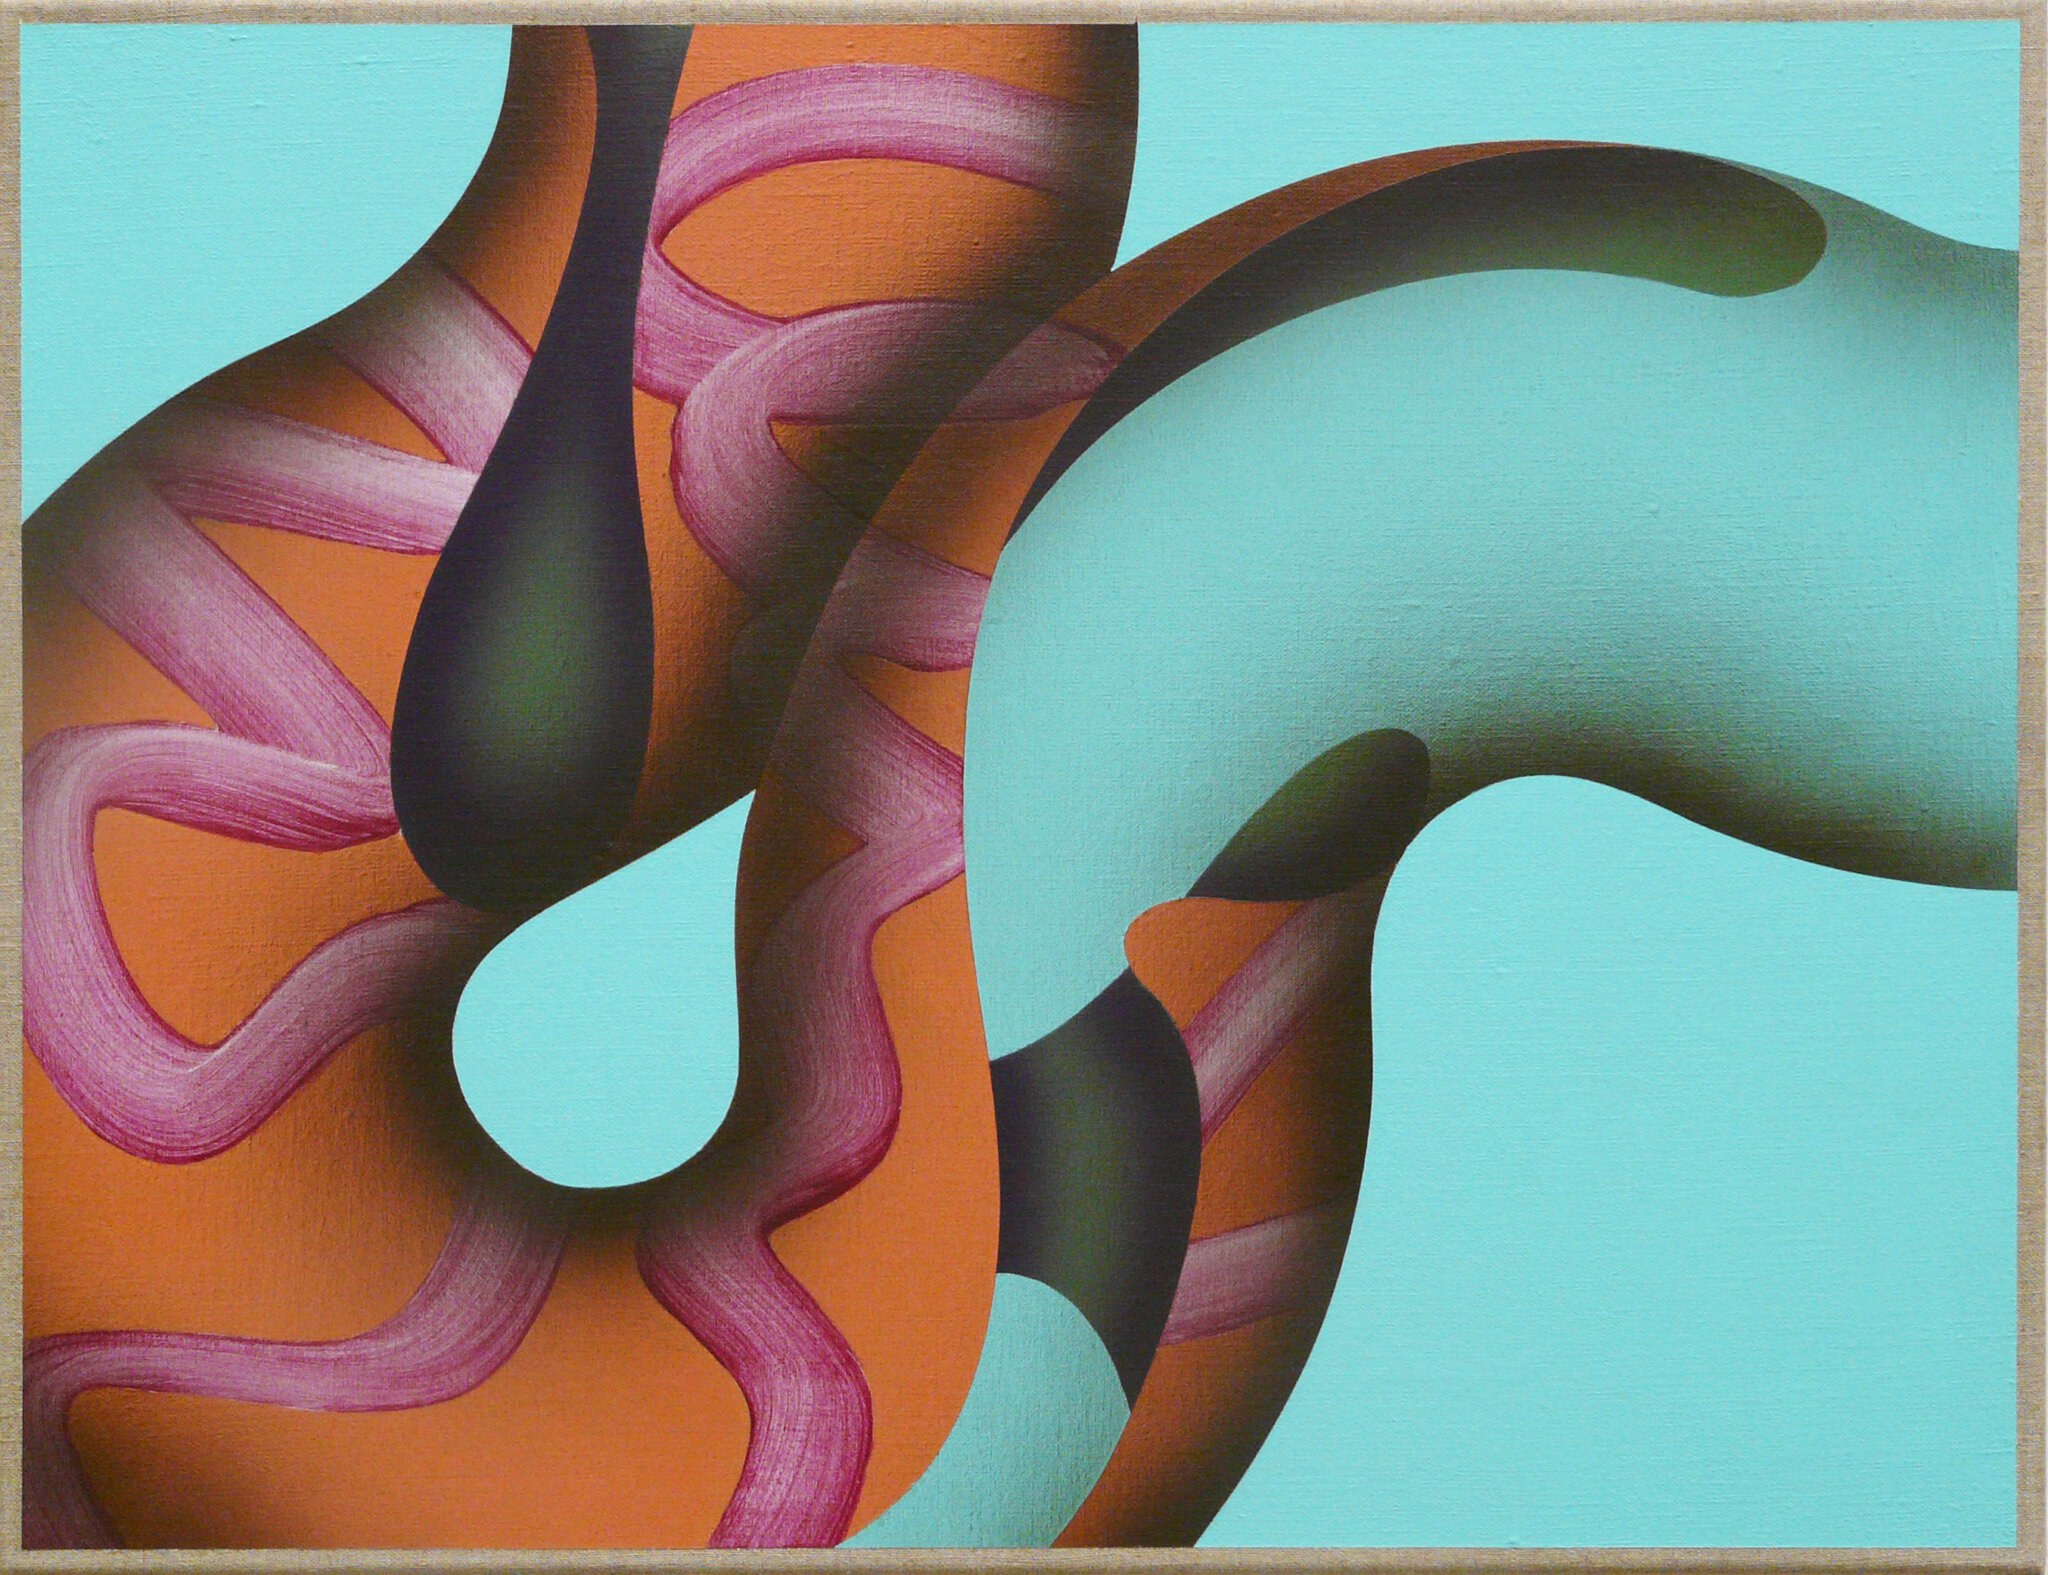 moneglia#2, acryl on canvas, 65 x 50 cm